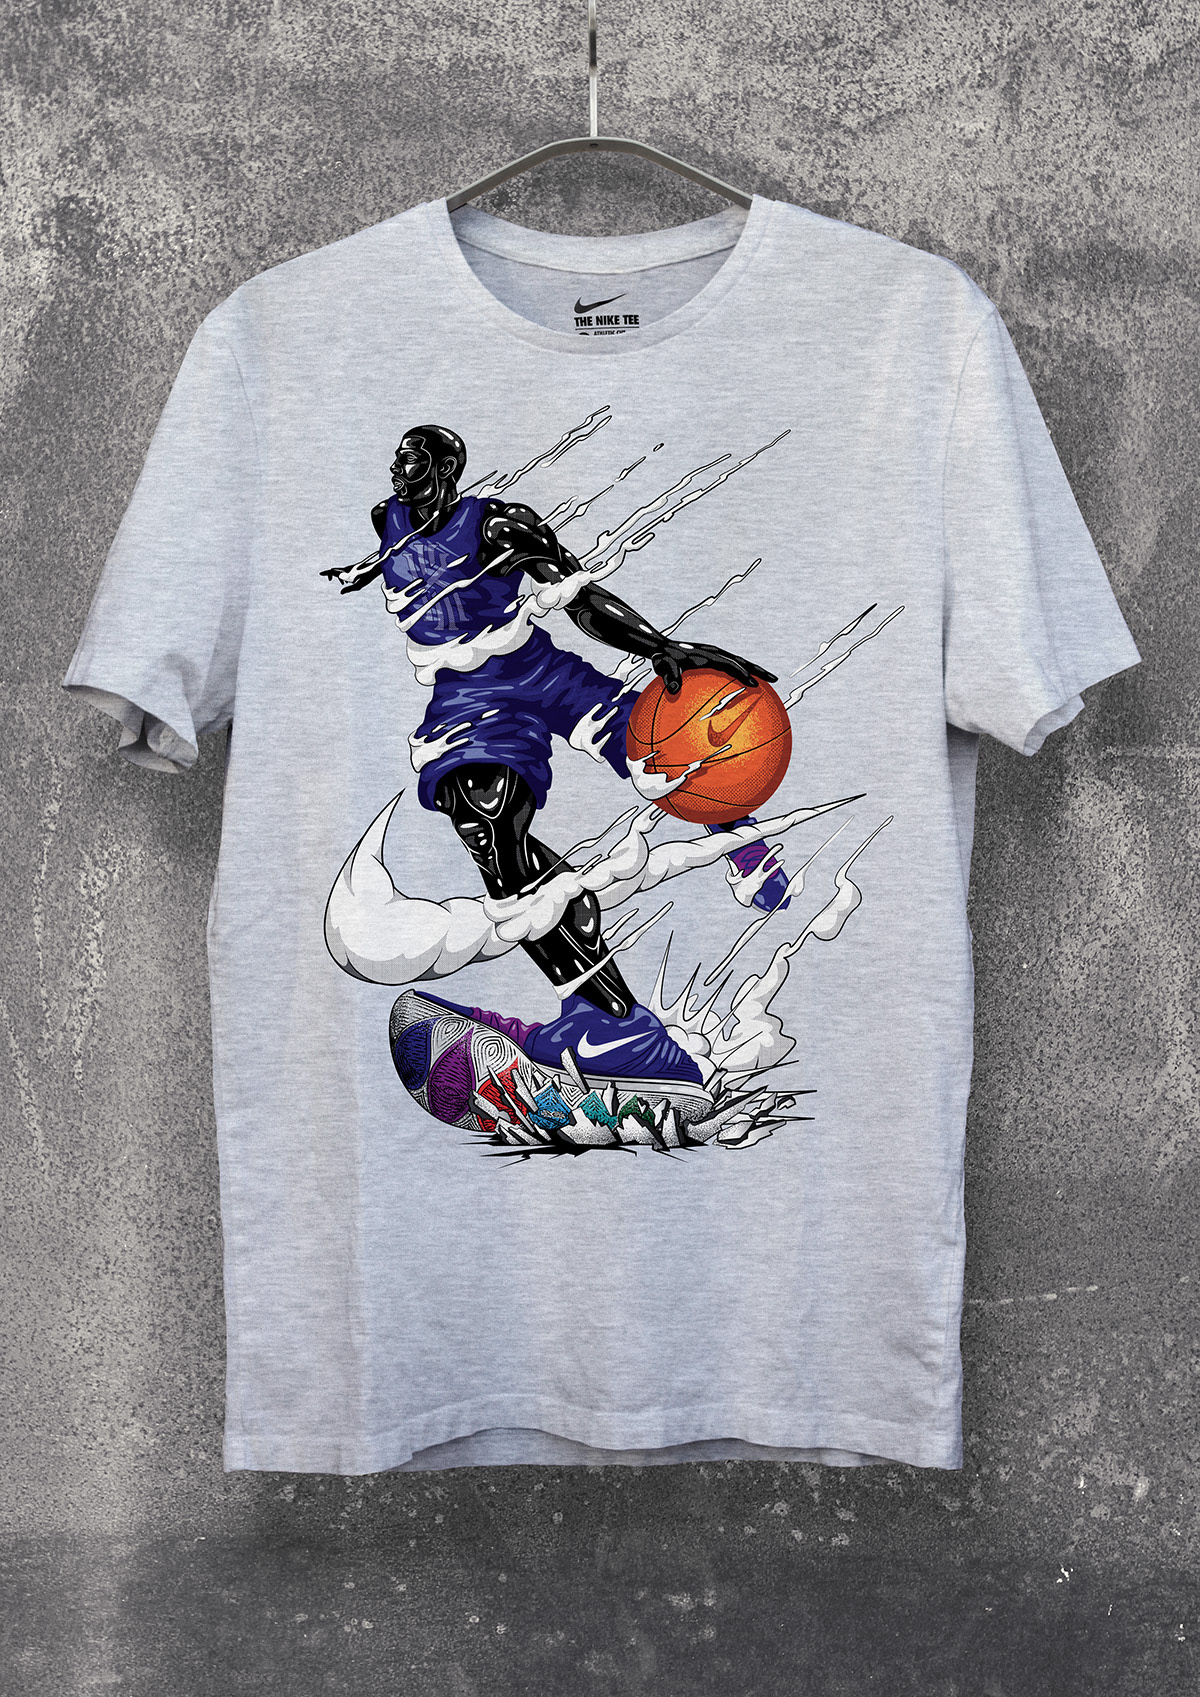 Nike - Kyrie Irving T-shirt on Behance